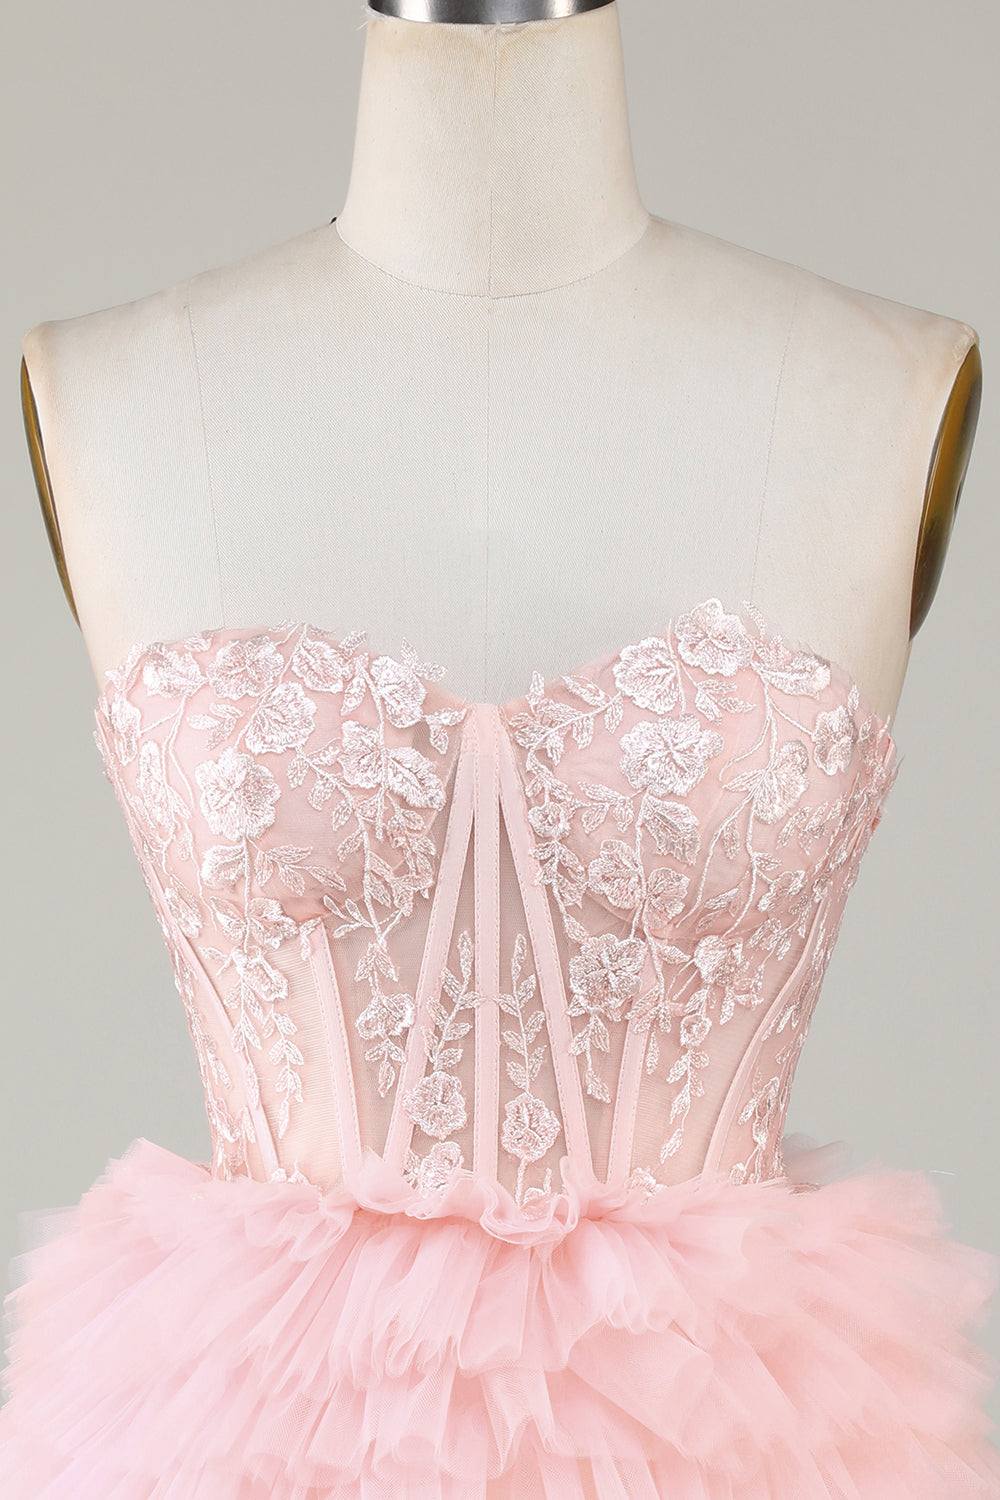 Cute A Line Sweetheart Light Pink Corset Homecoming Dress with Ruffles